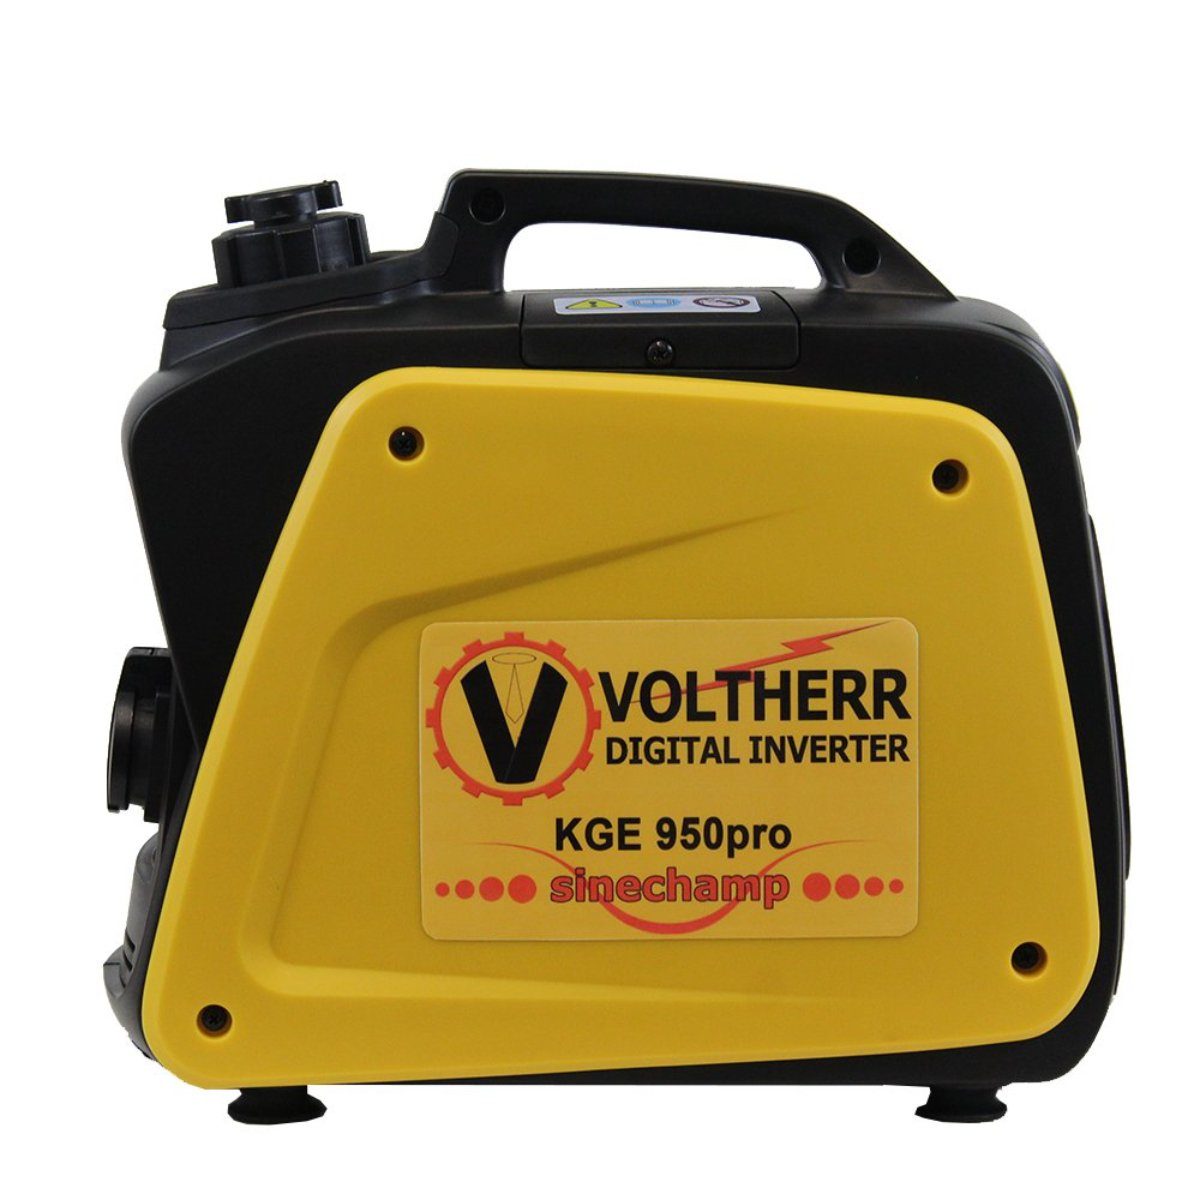 Voltherr Stromgenerator VOLTHERR KGE 950pro Inverter Generator